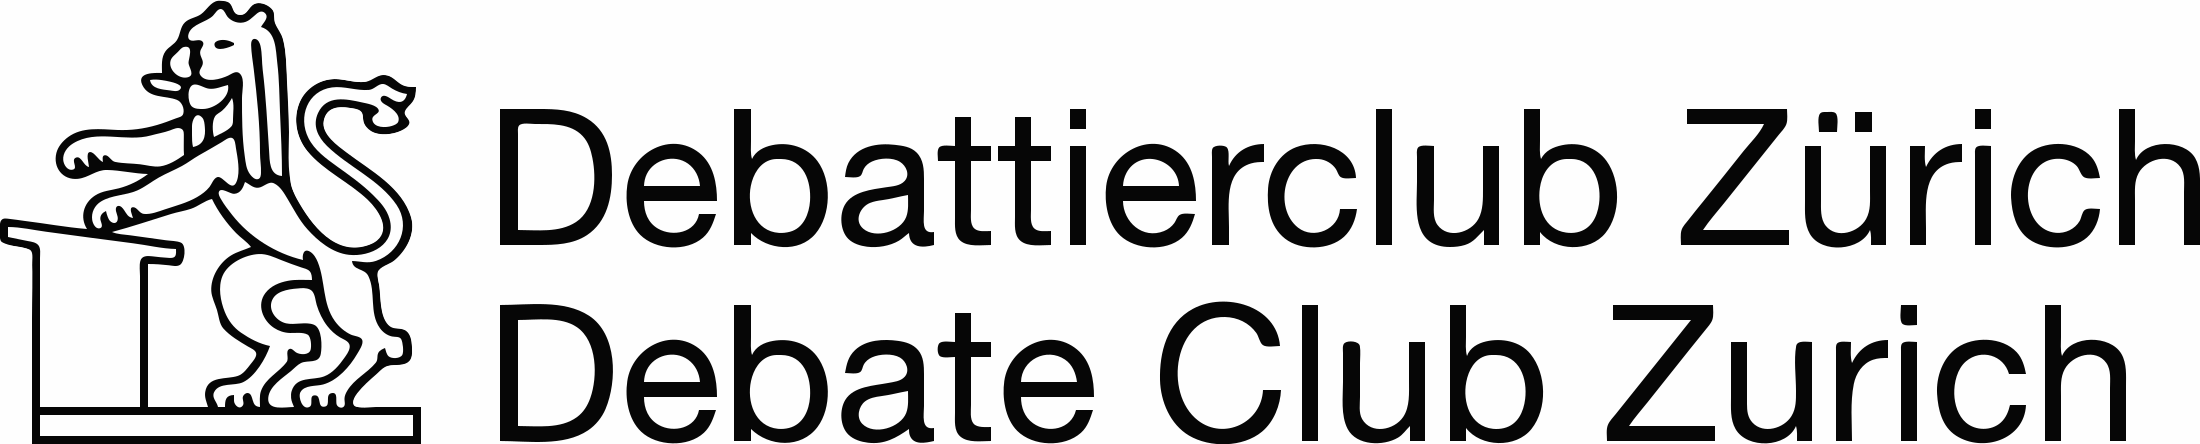 Logo of Debattierclub